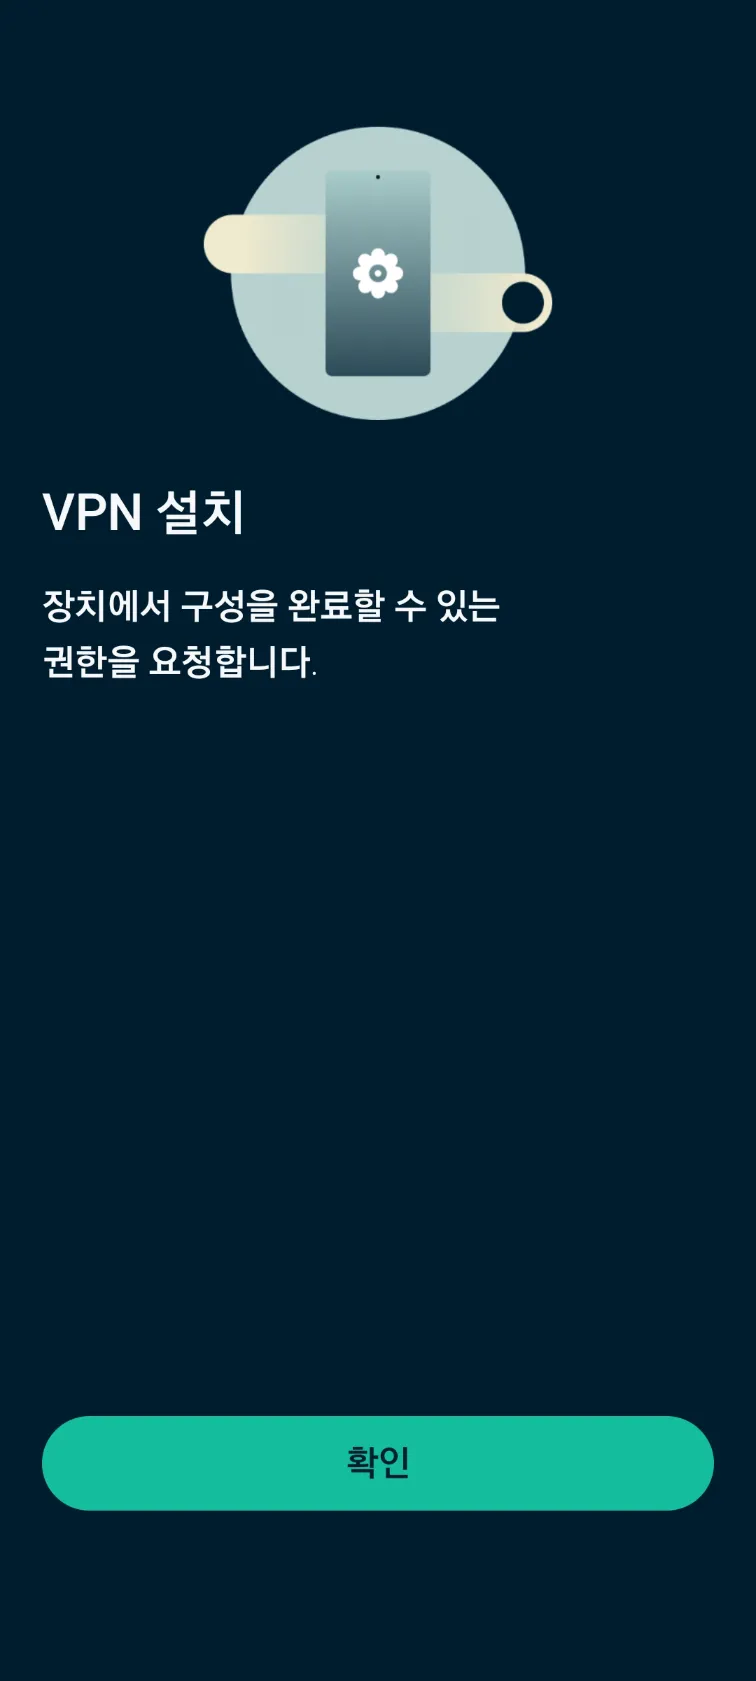 Express VPN 설치